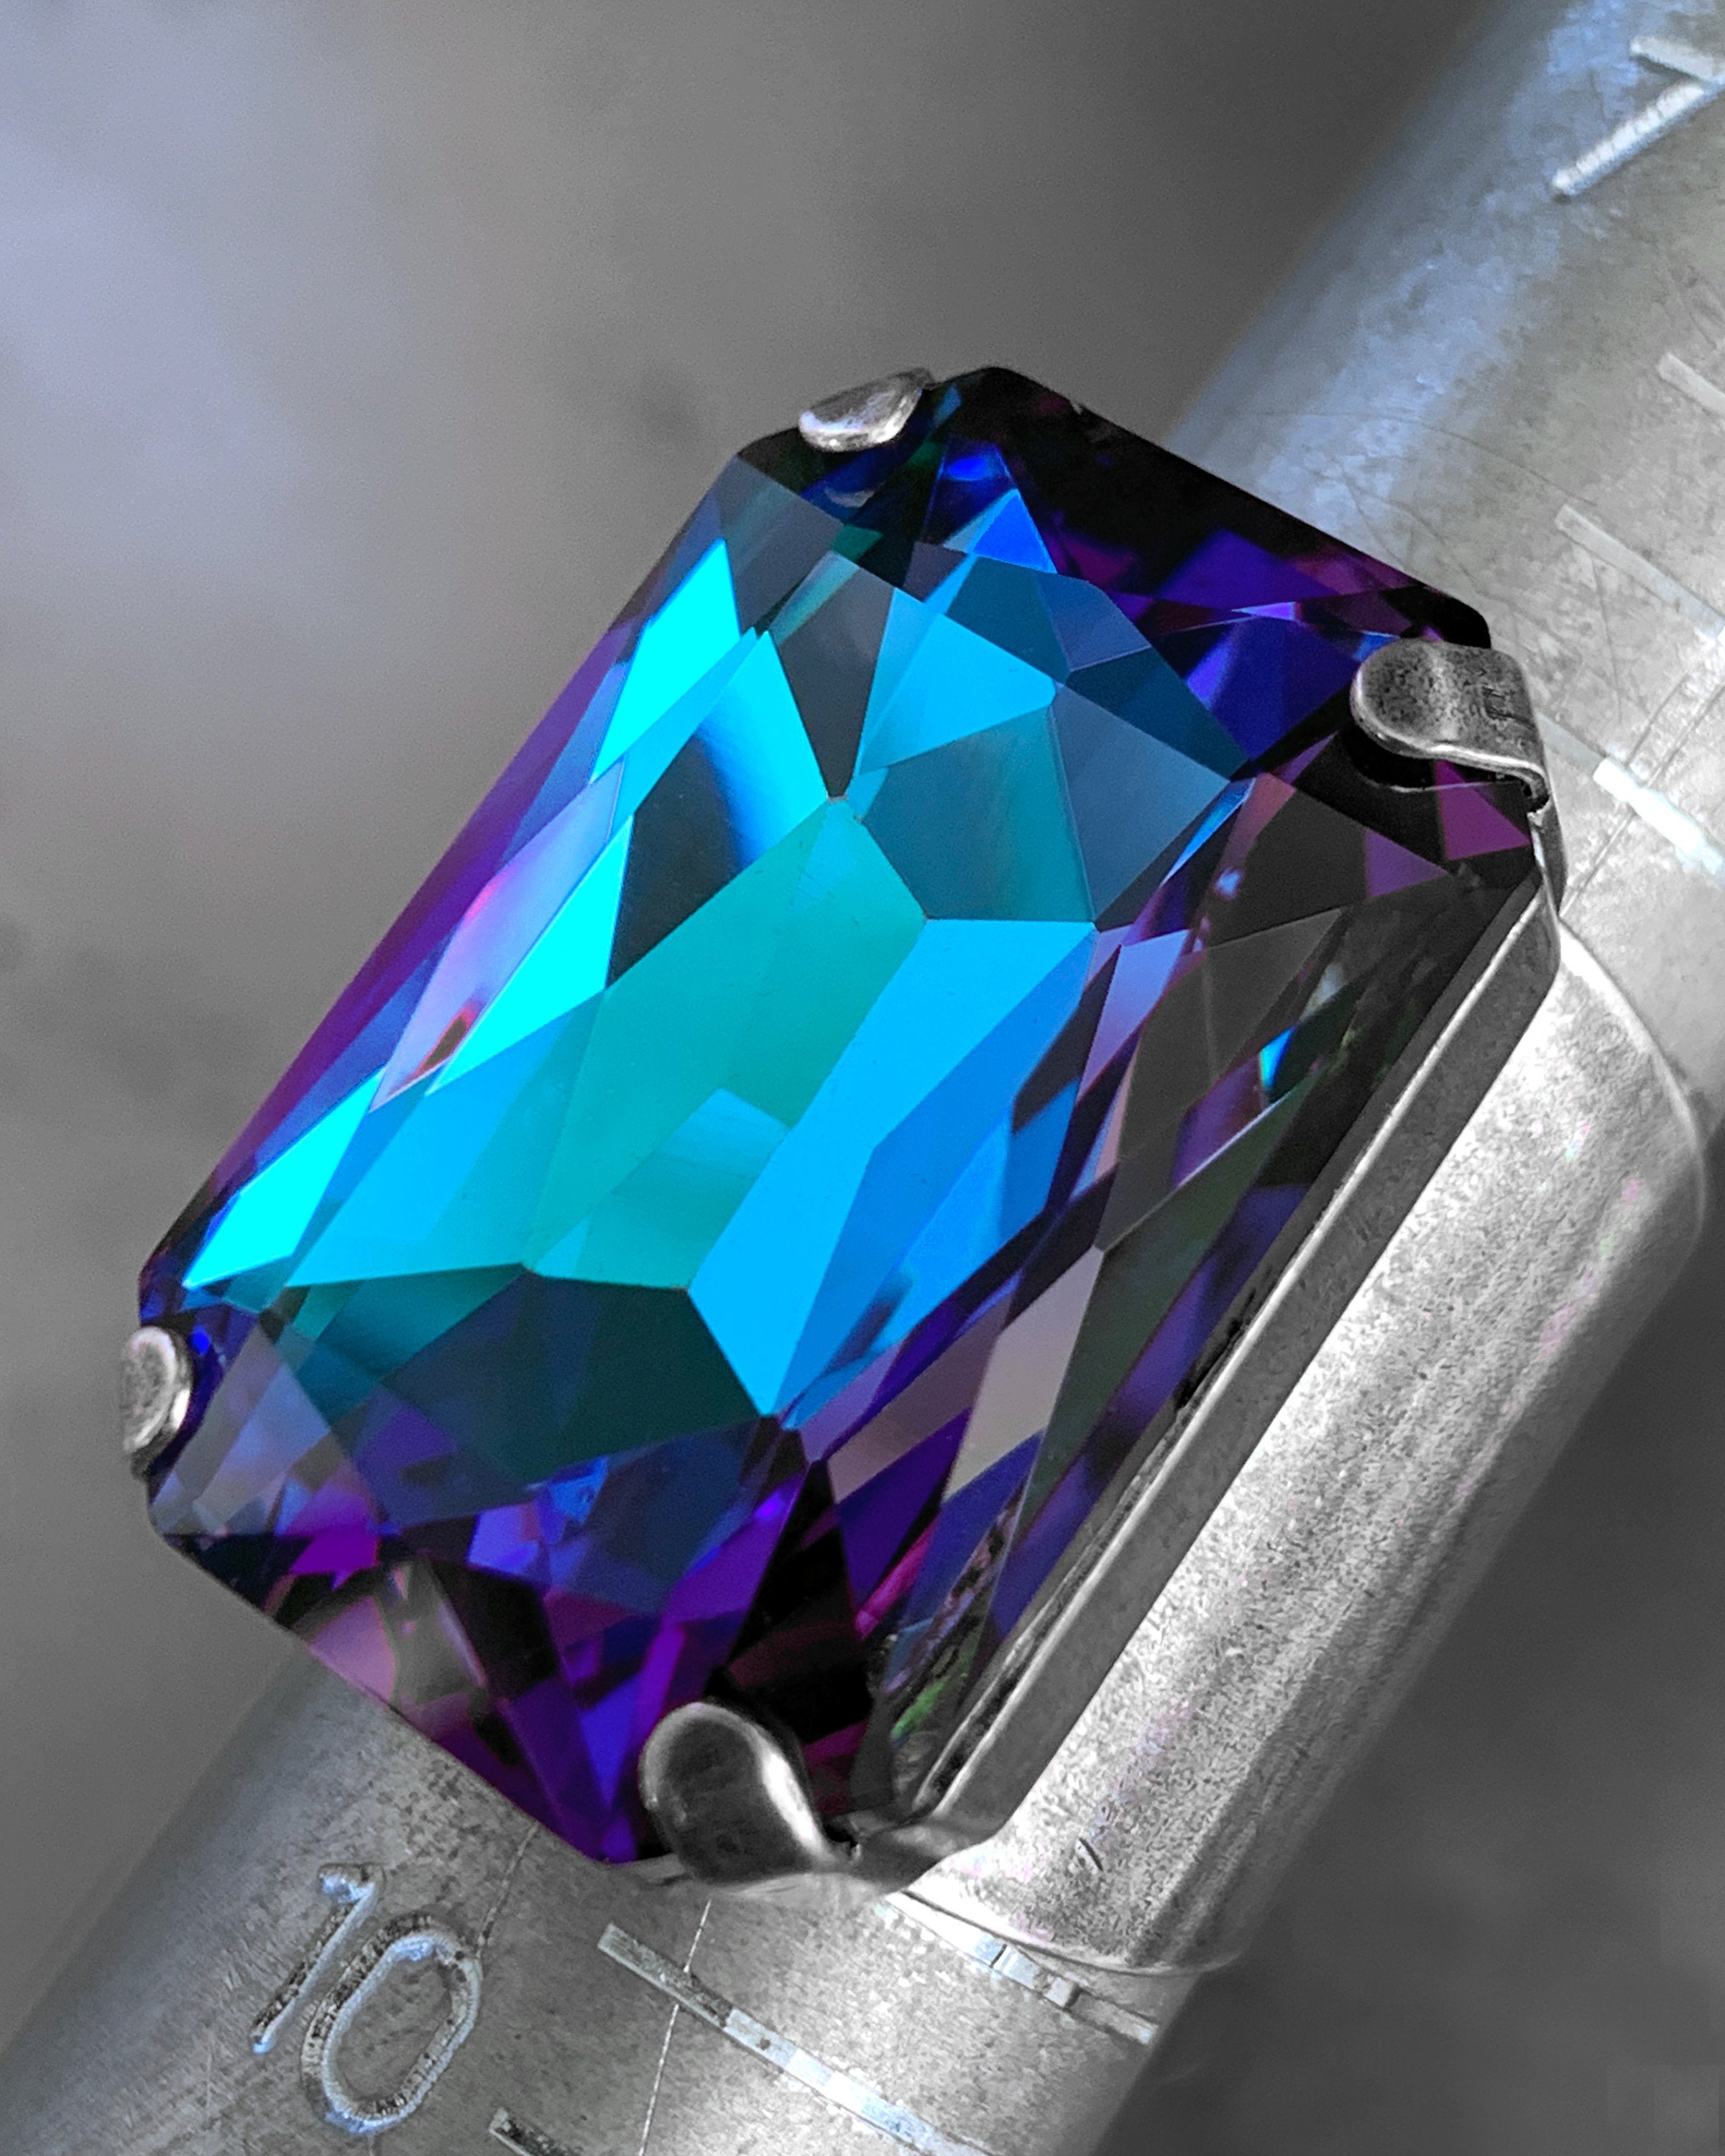 ILLUSION - Large Swarovski Crystal Crystal Ring in Heliotrope - Aqua, Blue, Violet Purple Crystal Ring - Unisex - LIMITED EDITION